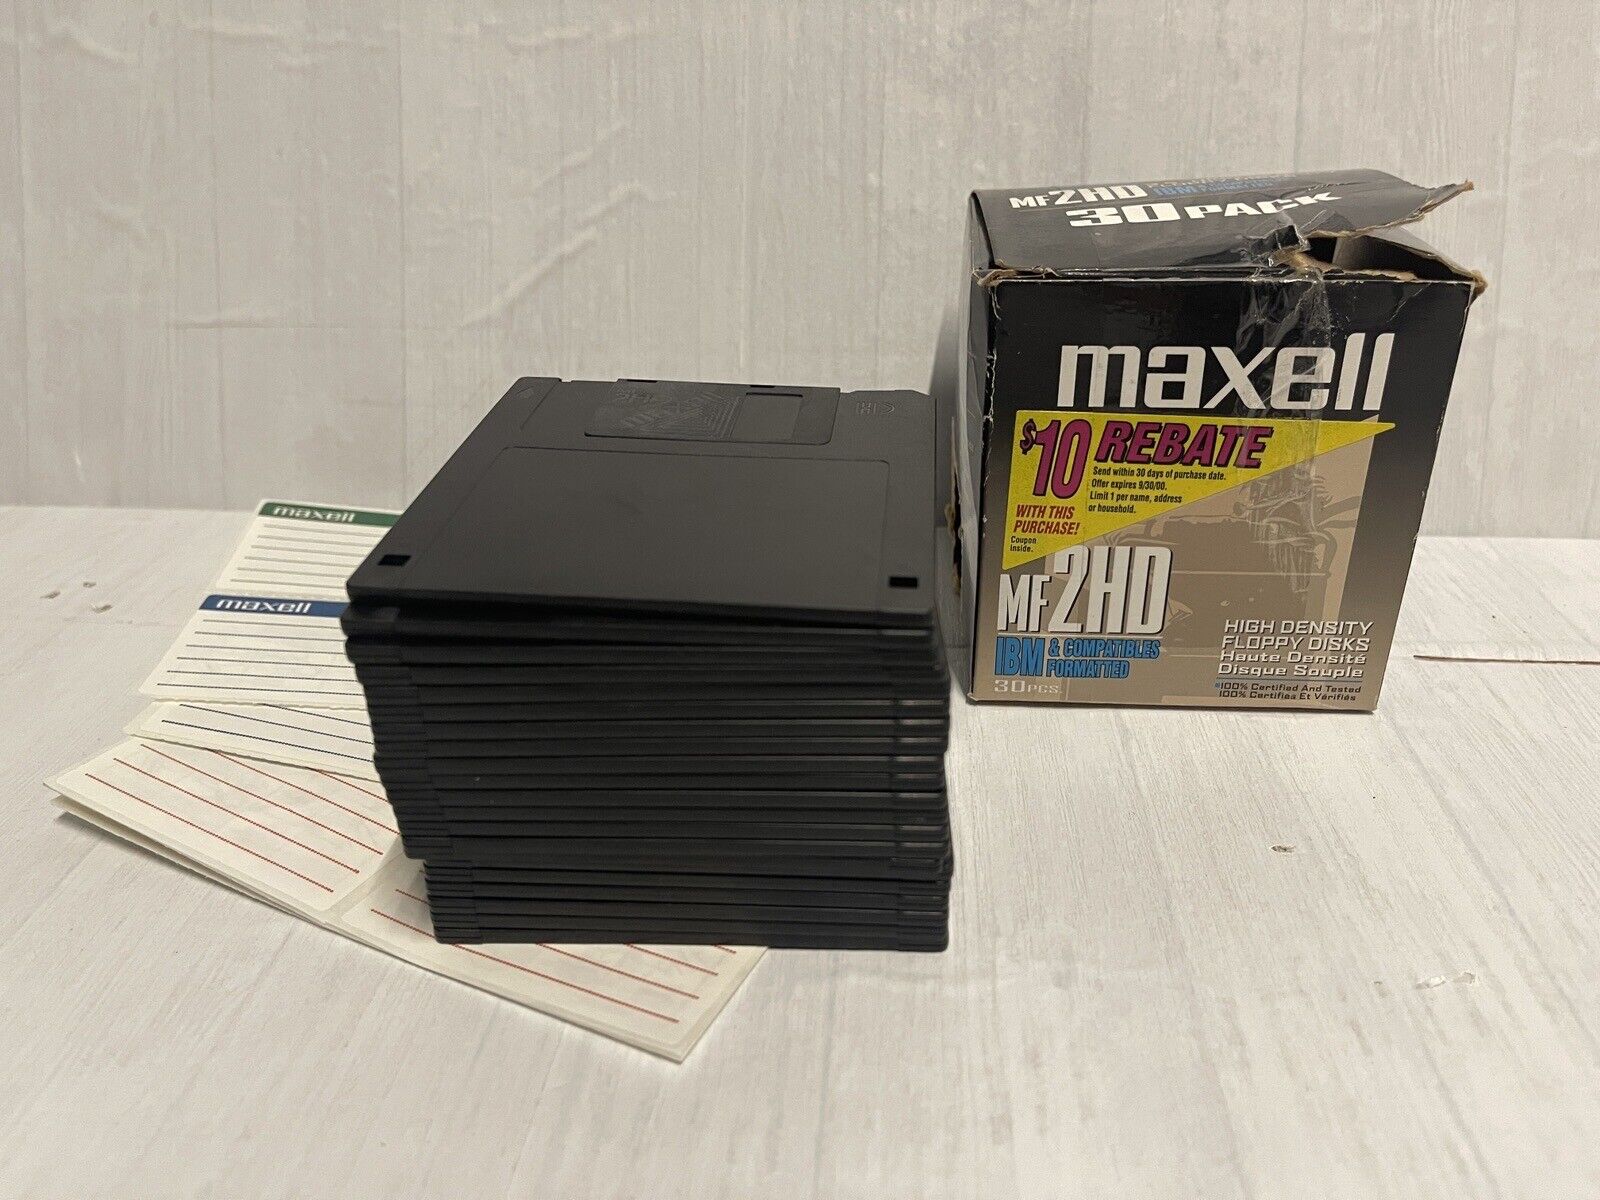 Maxell MF 2HD High Density Floppy Disks IBM 21 New Disks